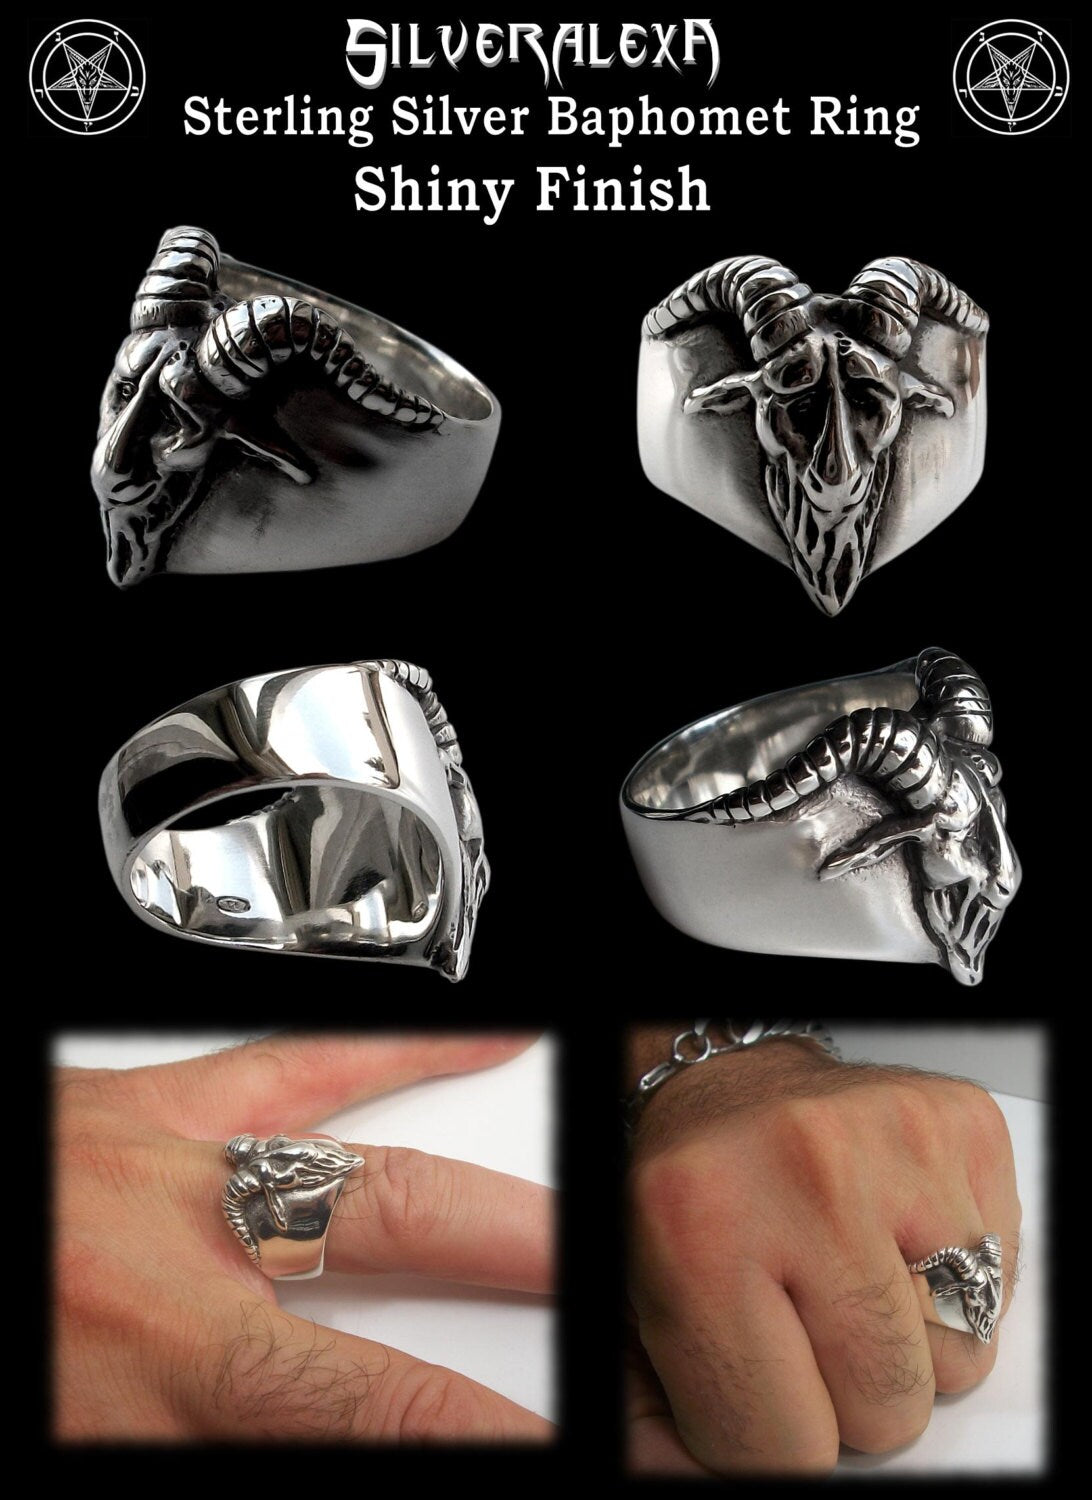 Baphomet ring - Sterling Silver Baphomet Evil Sabbatic Goat Ring - ALL SIZES - Brushed or Shiny finish